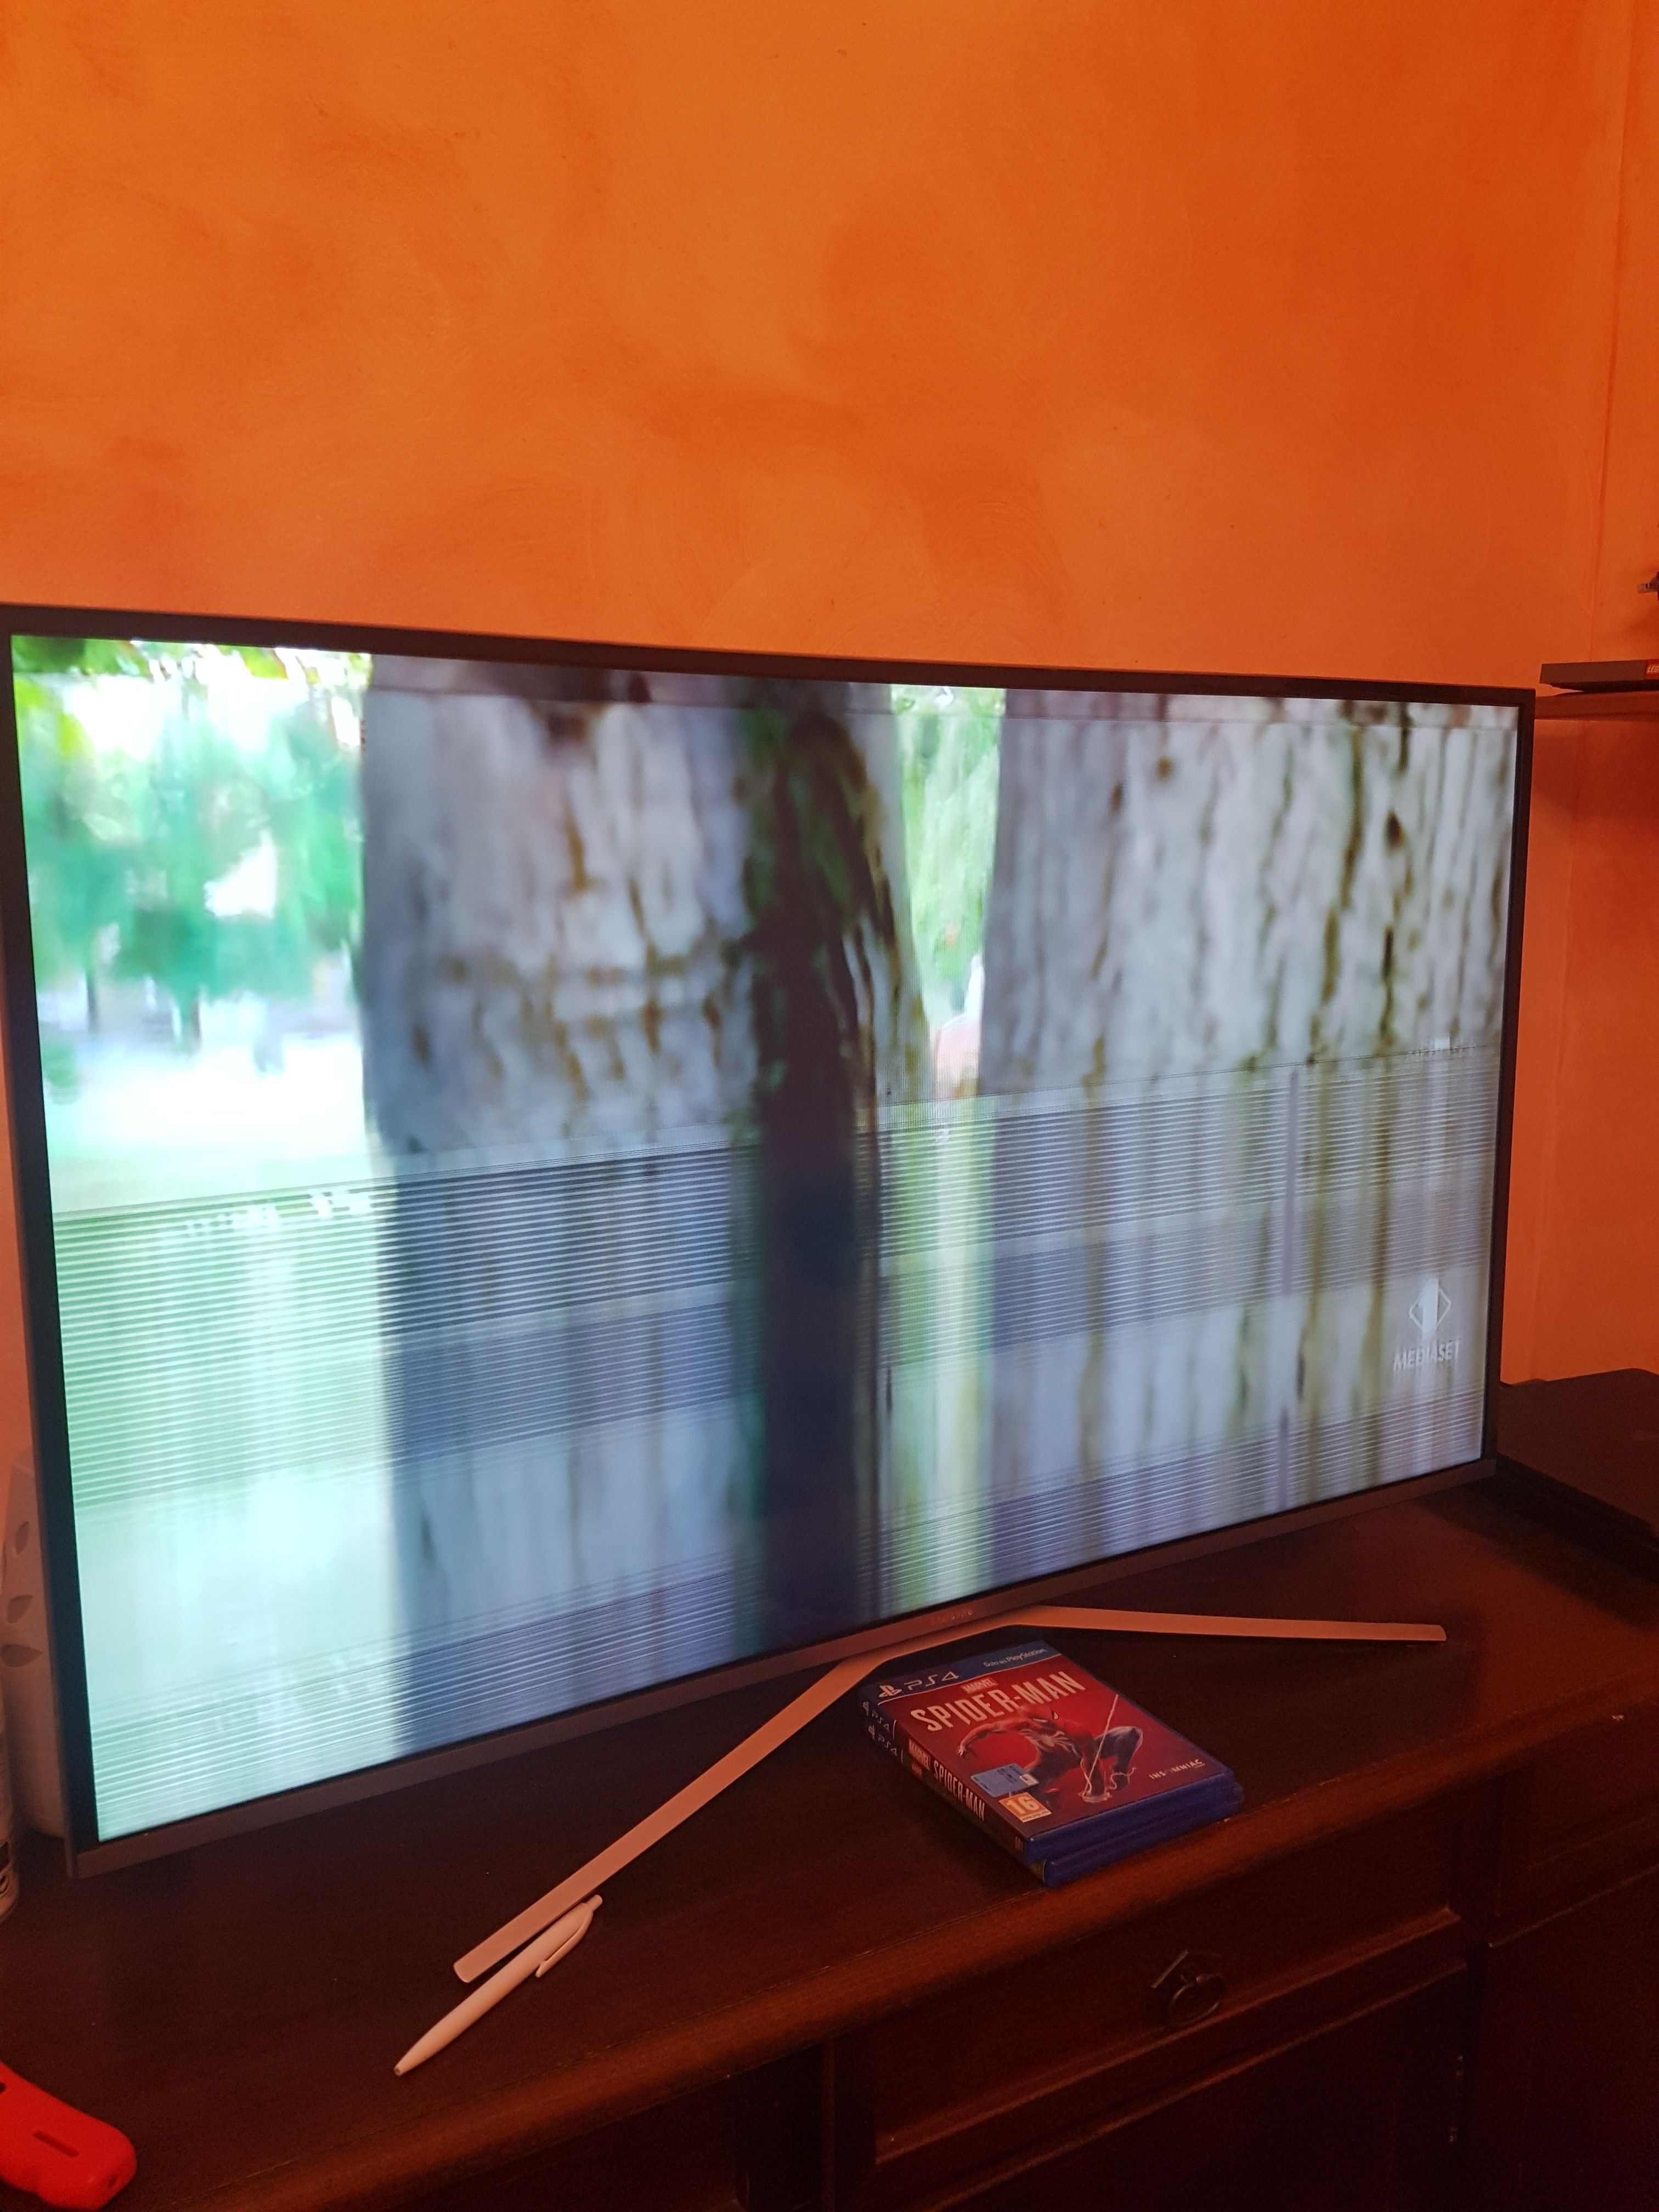 Problemi di righe su schermo smart tv UE43KU6400U - Samsung Community